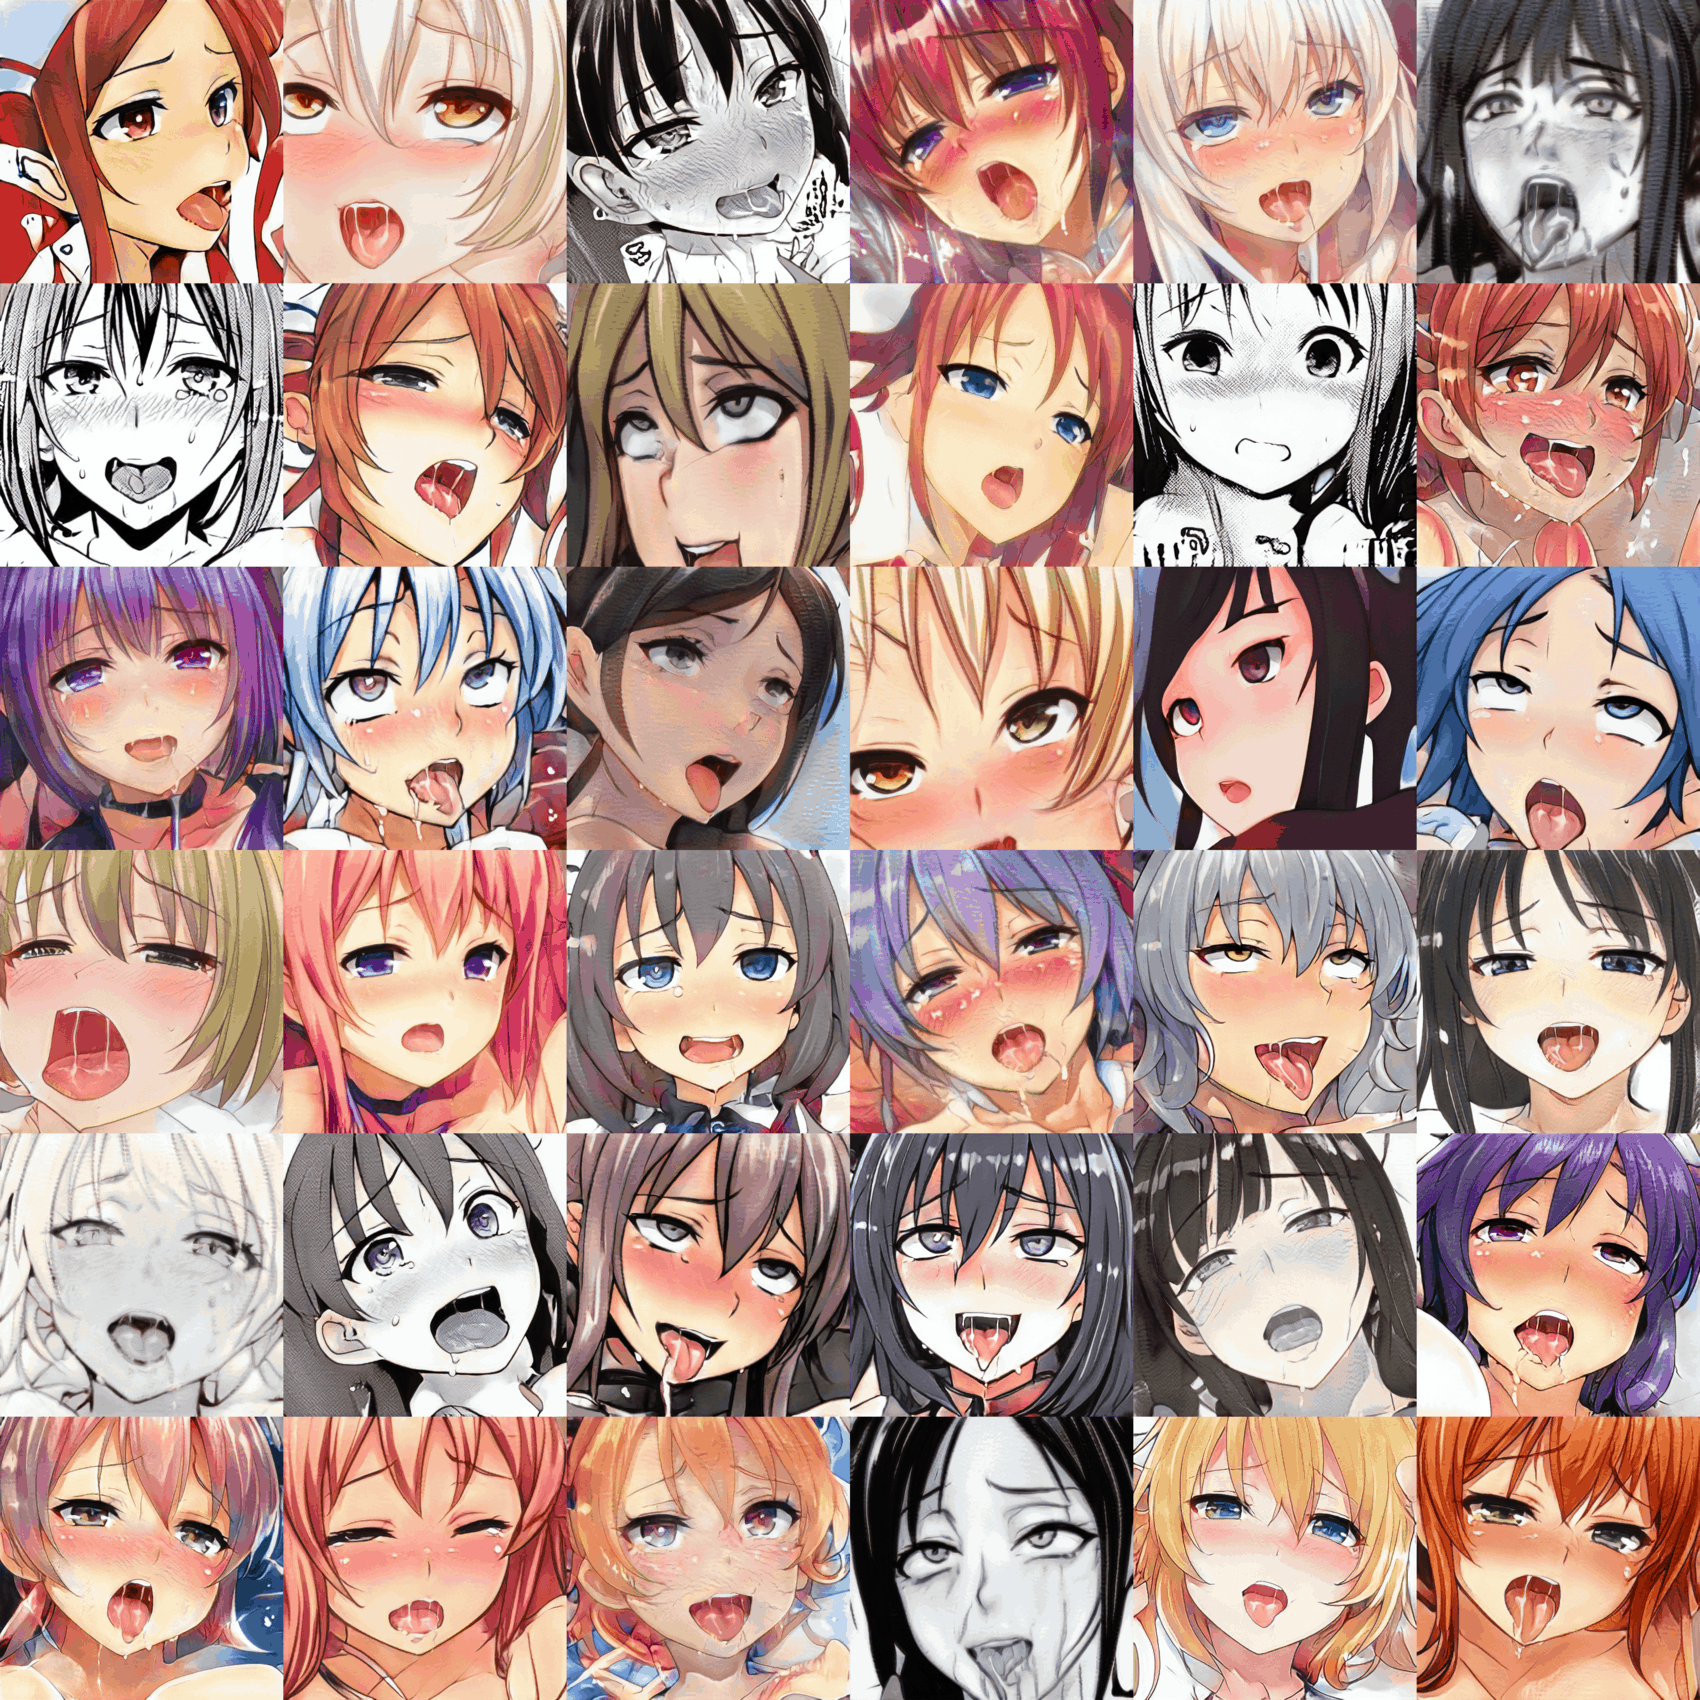 6×6 sample of ahegao StyleGAN faces